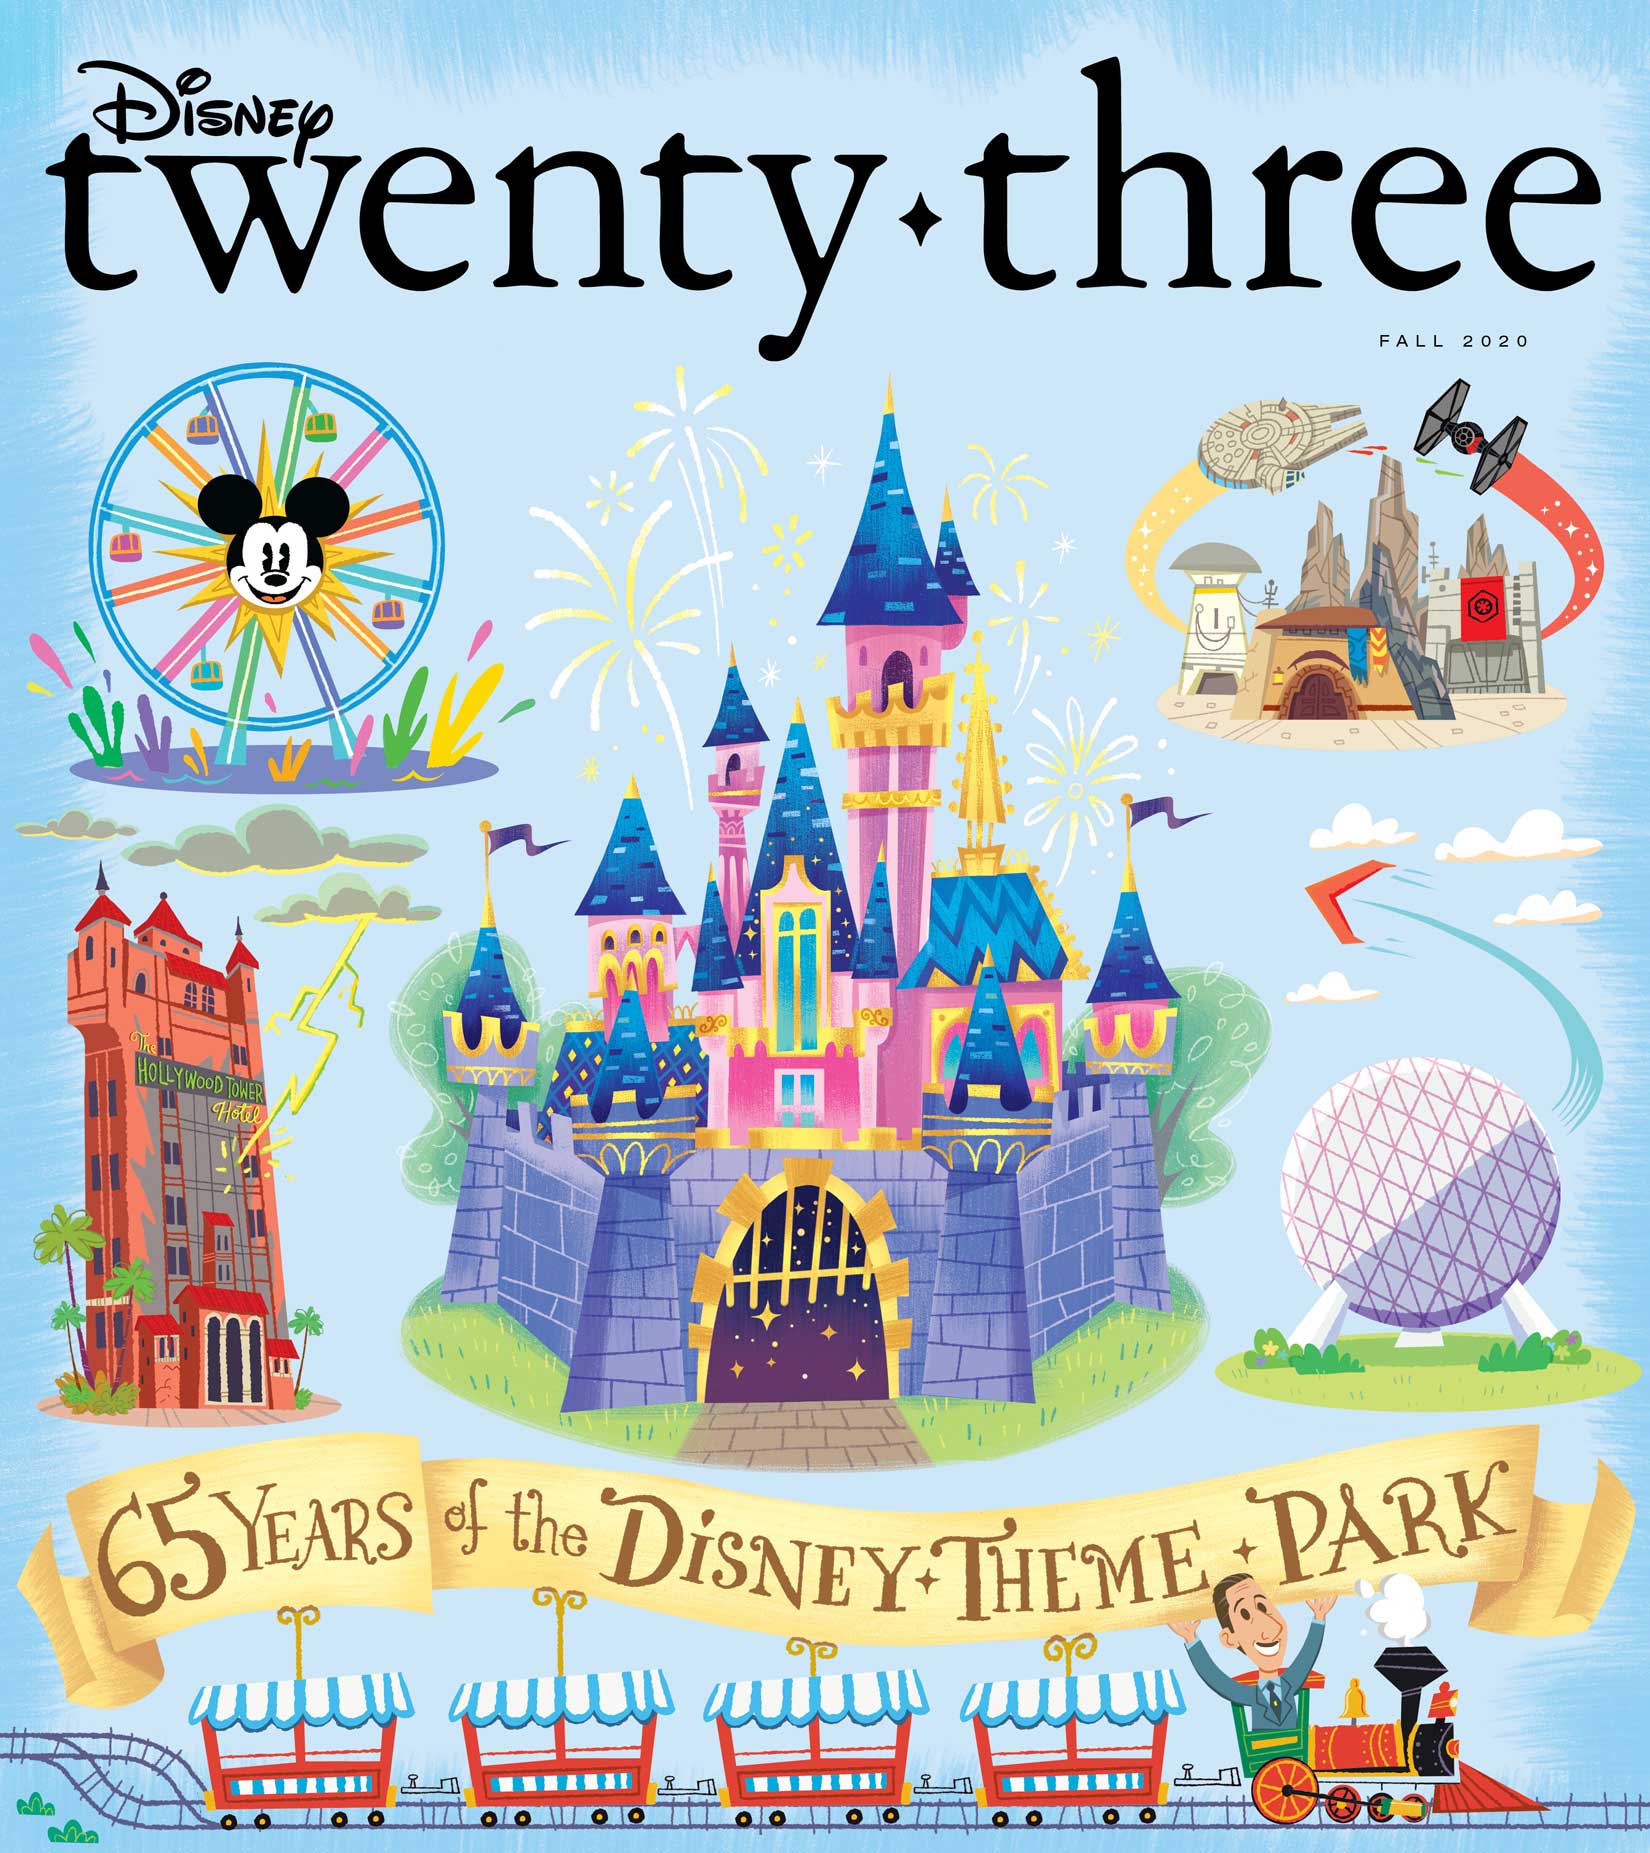 Details about   Disney D23 Twenty Three Fall 2020 Magazine Exclusive Disneyland Postcard Set New